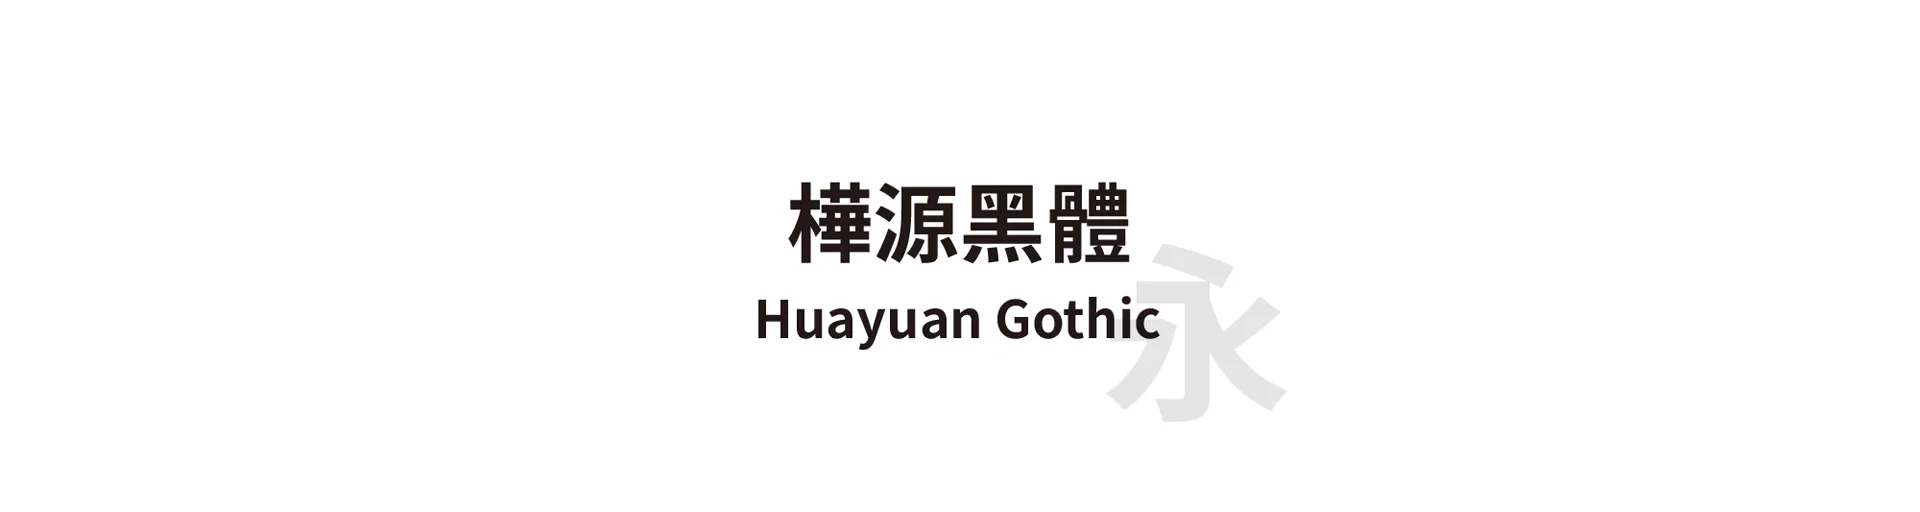 Huayuan Gothic